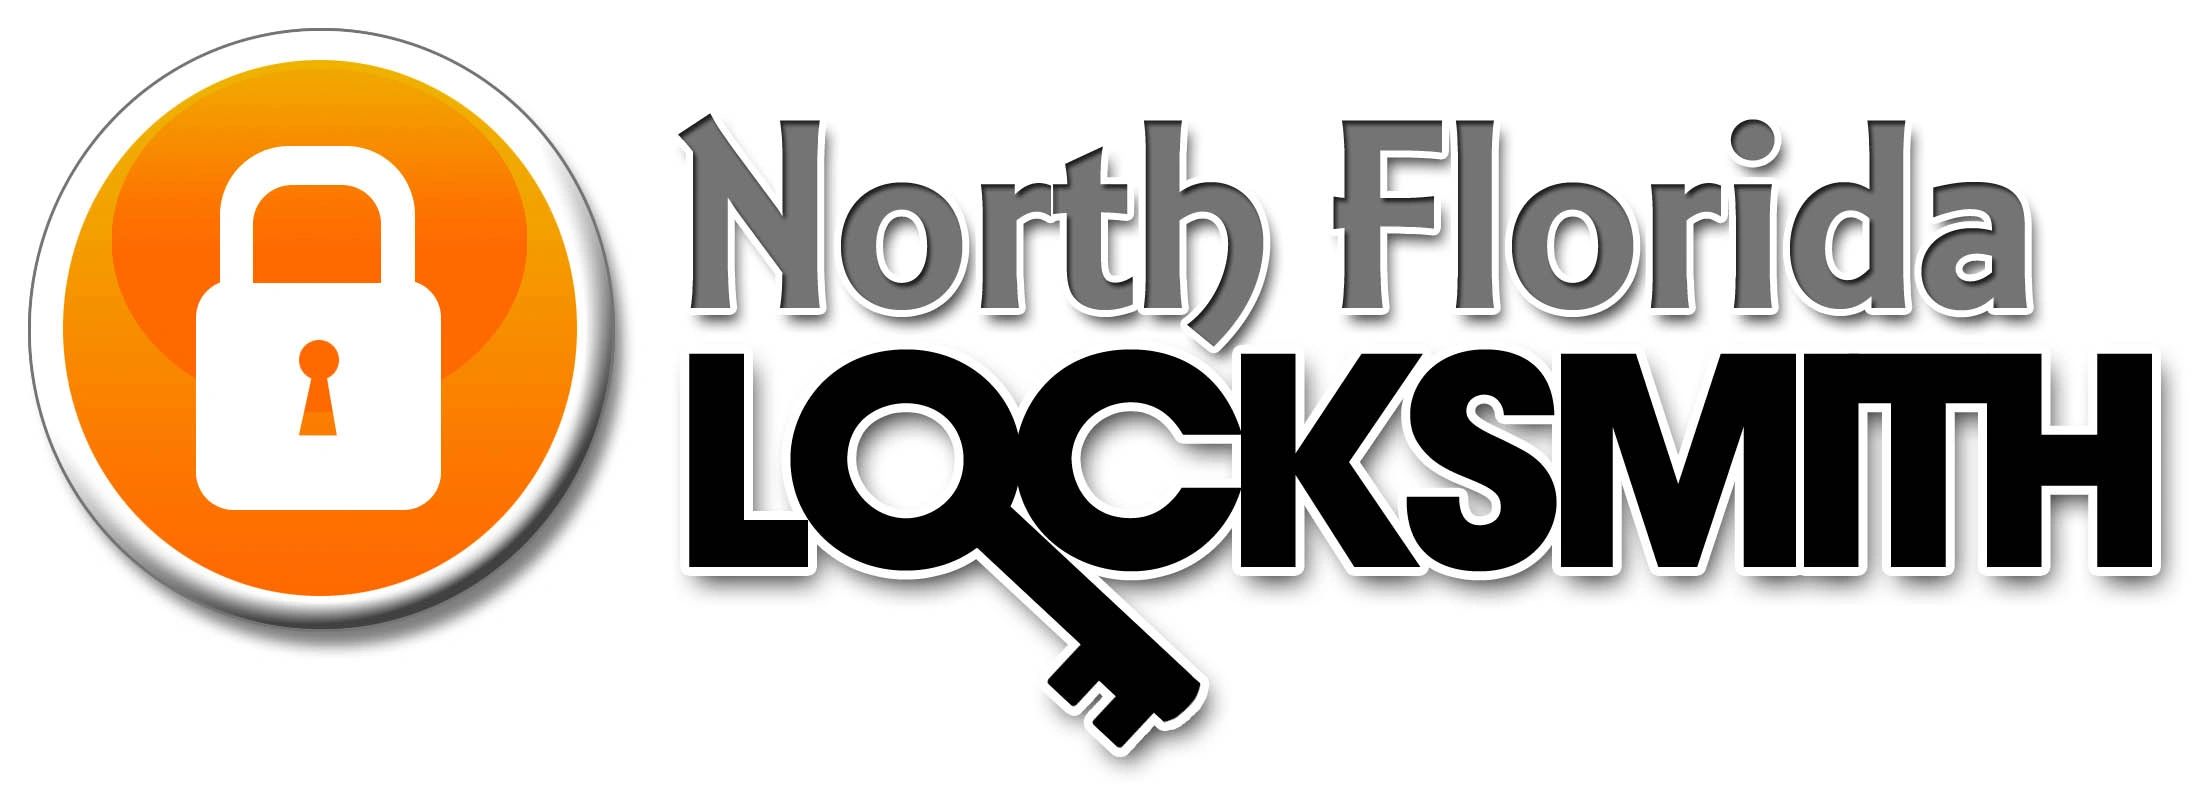 (c) Northfloridalocksmith.com